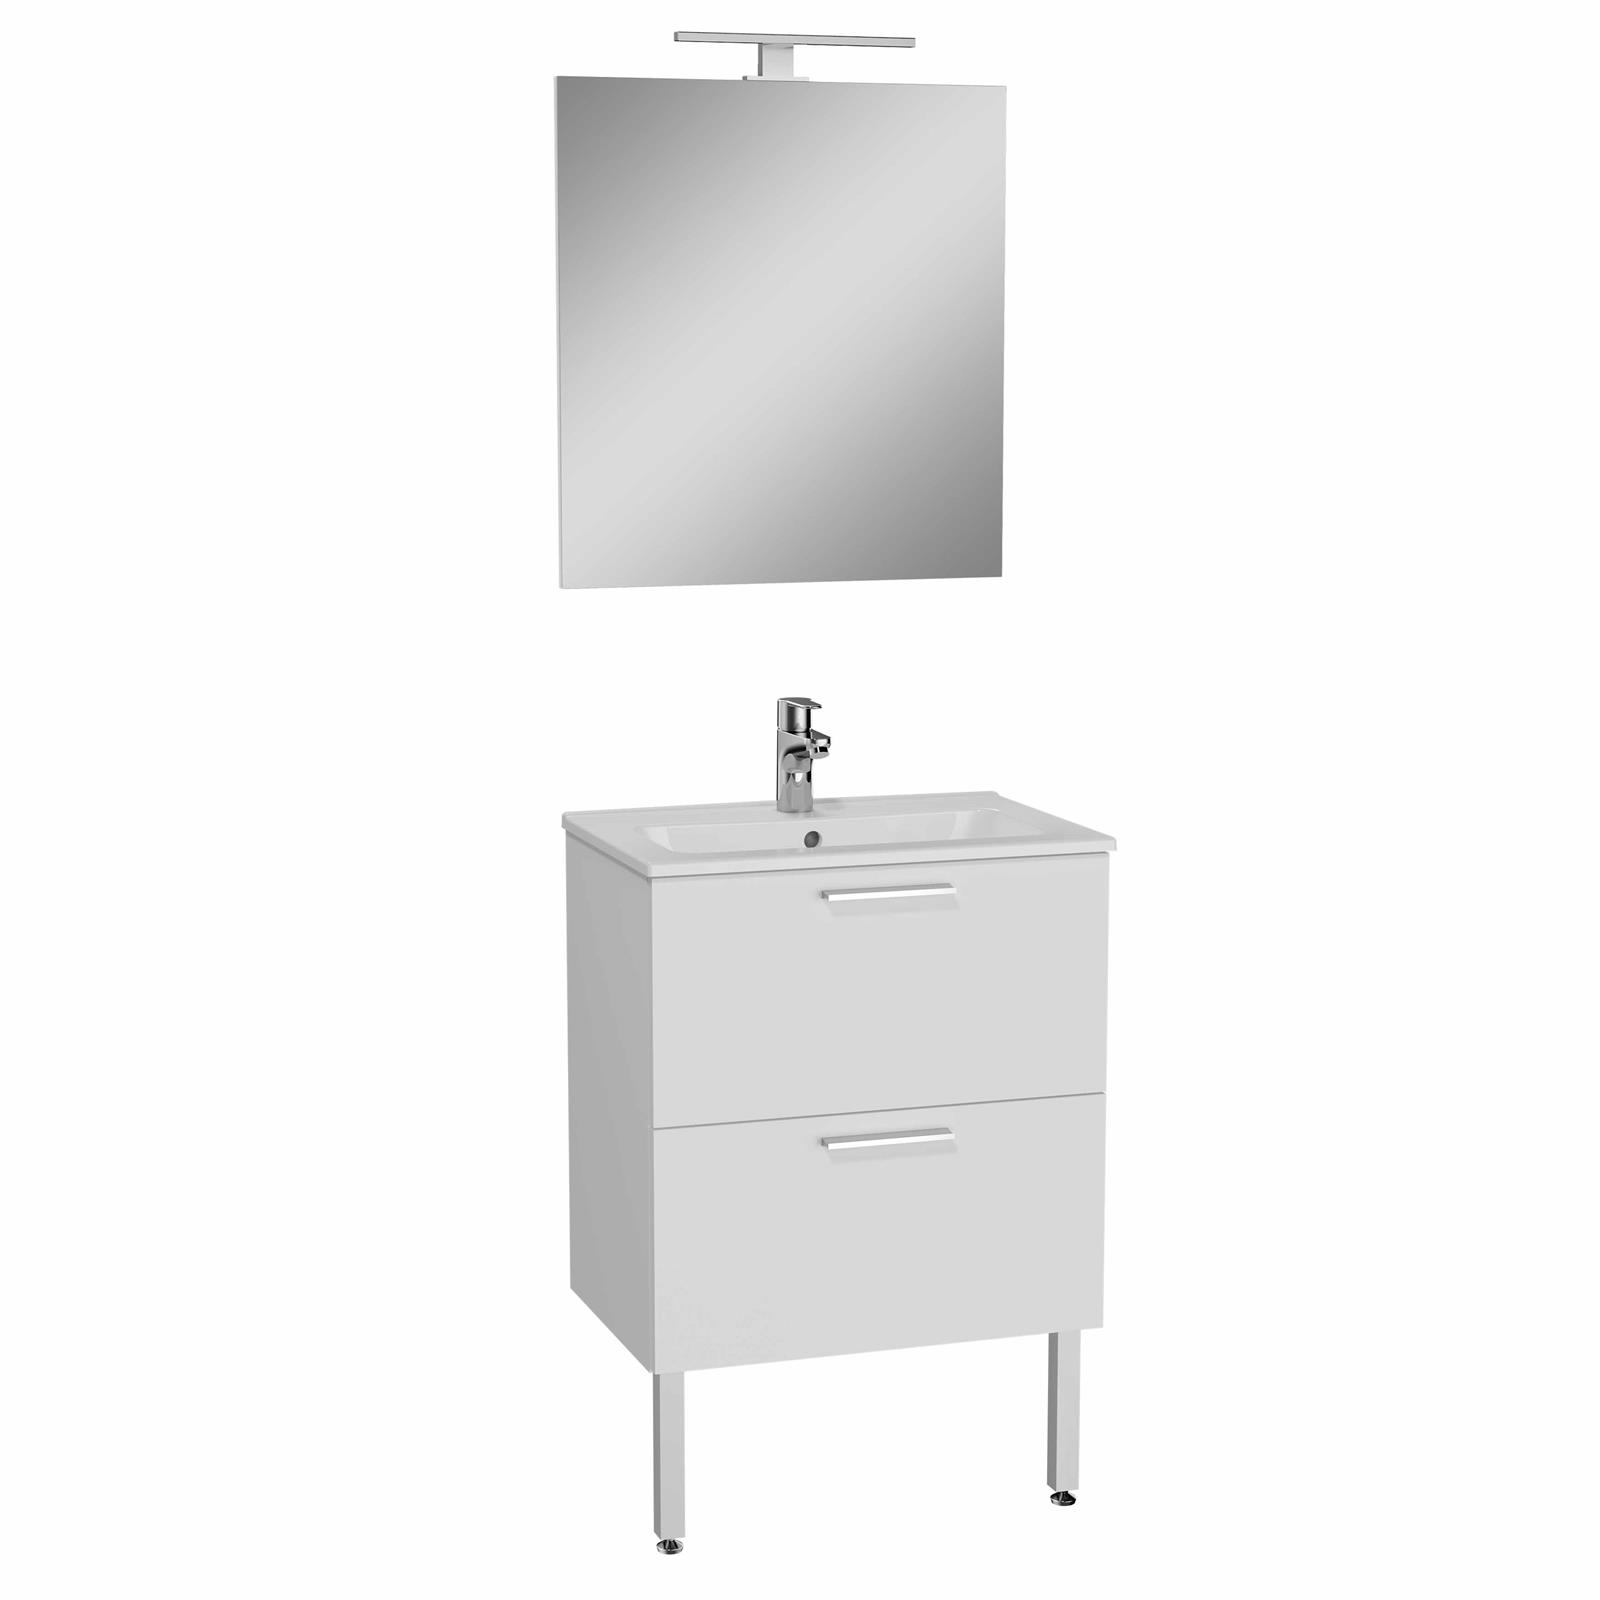 Set de meuble MIA avec plan en céramique et miroir - Coloris meuble: blanc - Finition meuble : brill